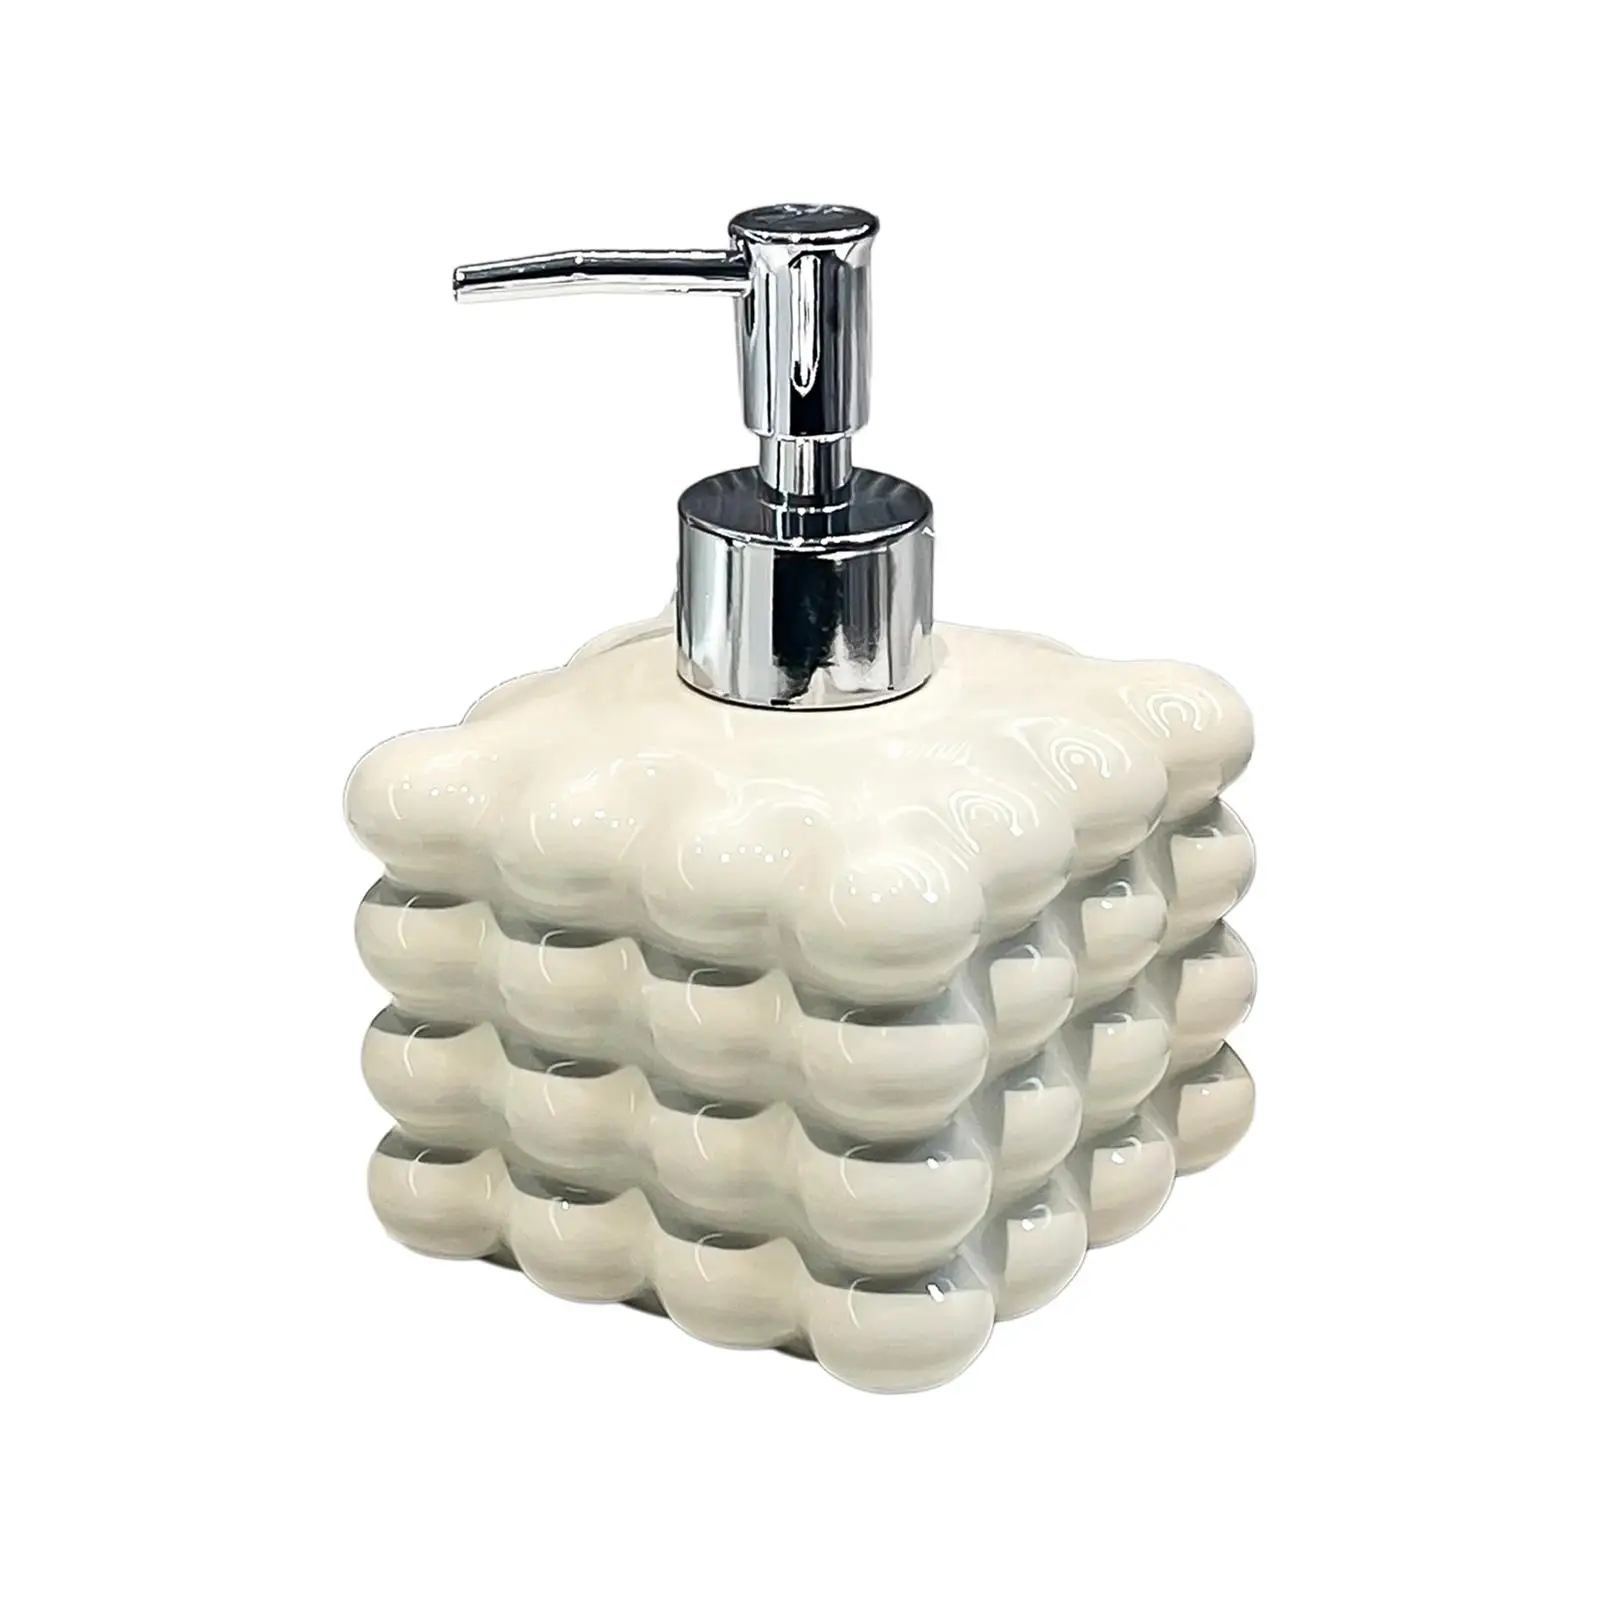 Porcelain Lotion Dispenser with Pump Body or Hand Lotion Bottle Hand Soap Dispenser for Hotel Bathroom Bedroom Kitchen Decor